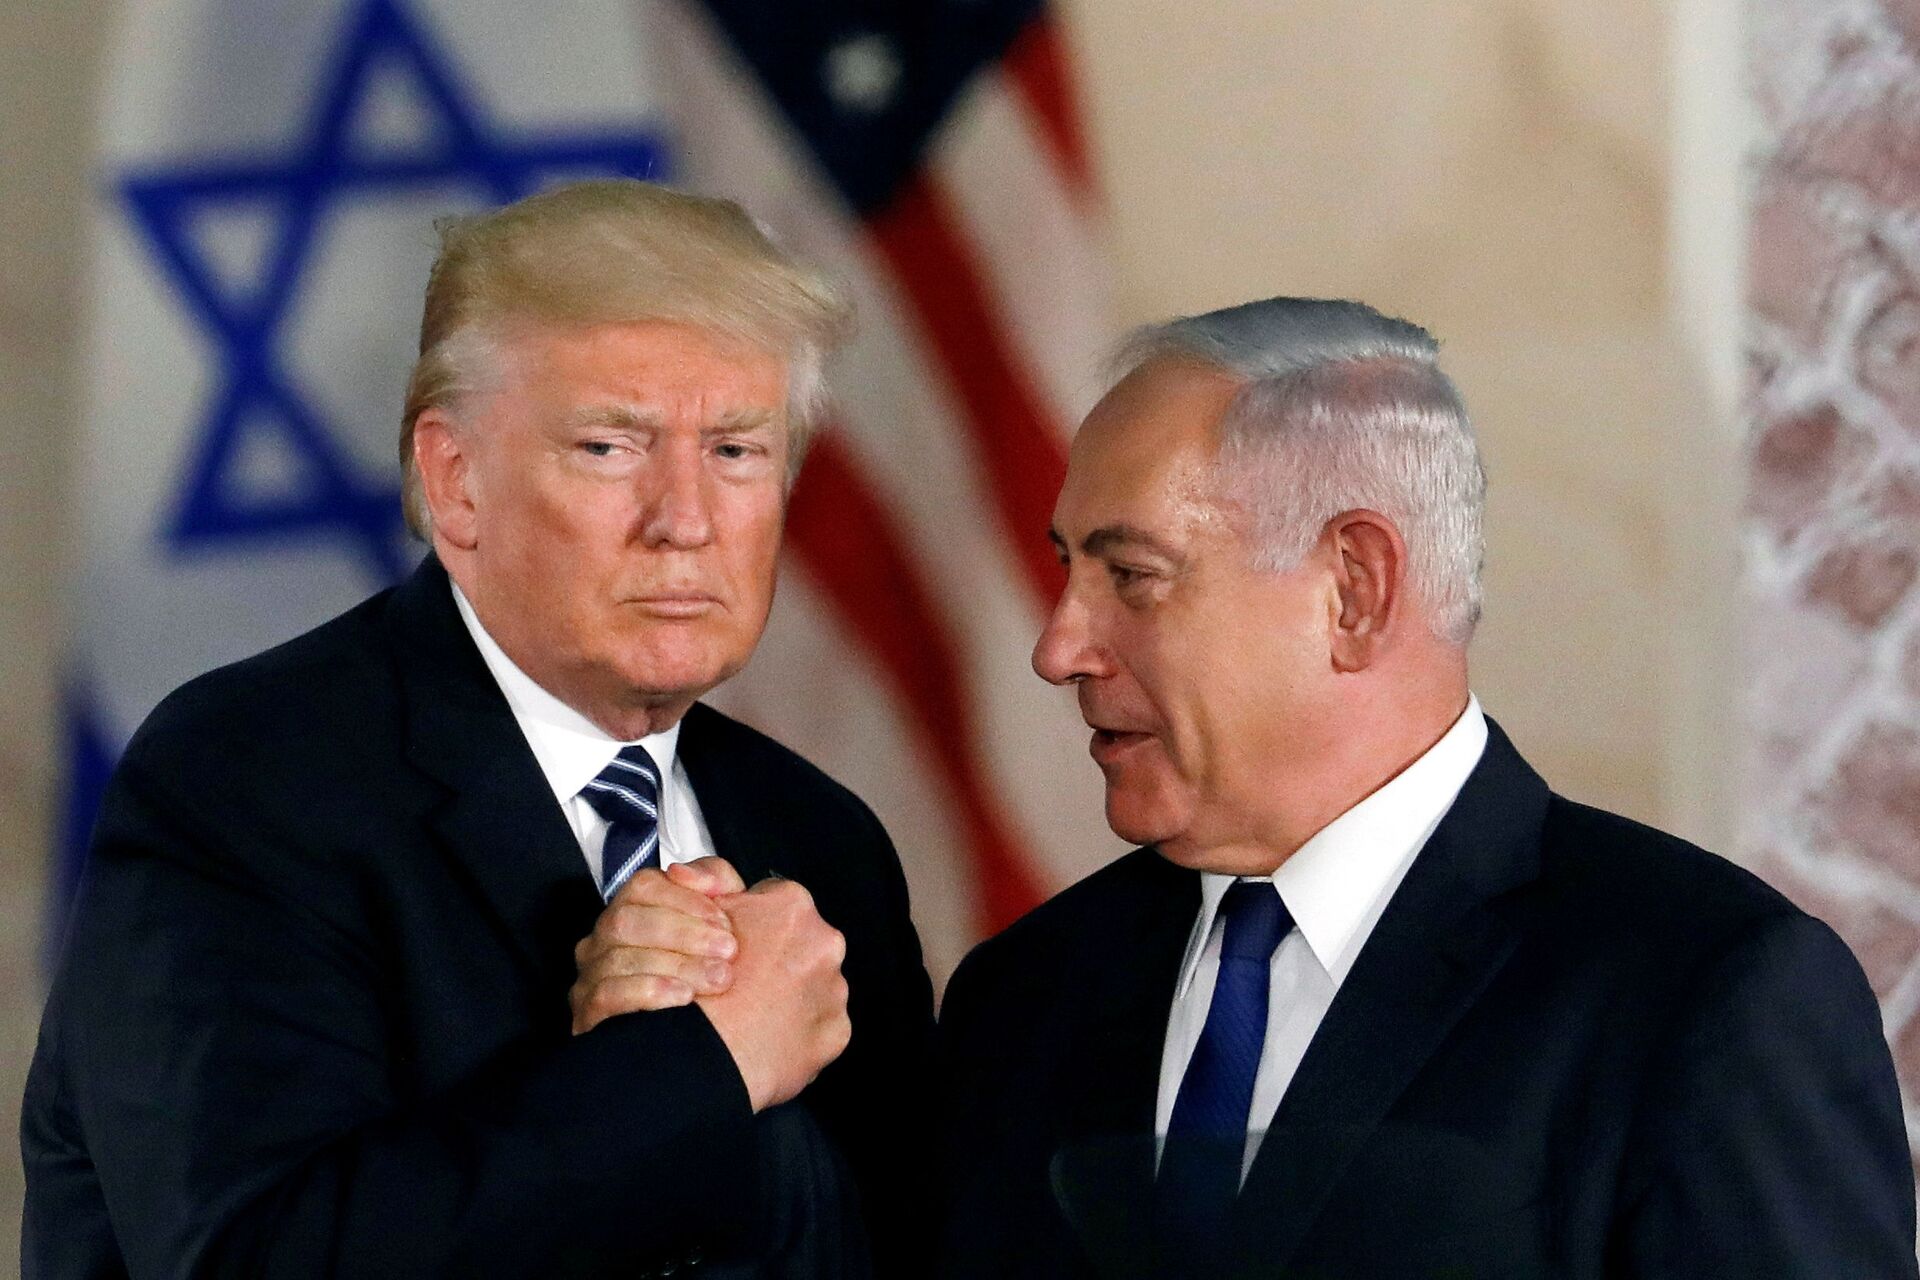 U.S. President Donald Trump and Israeli Prime Minister Benjamin Netanyahu shake hands after Trump's address at the Israel Museum in Jerusalem May 23, 2017. - Sputnik International, 1920, 11.09.2021